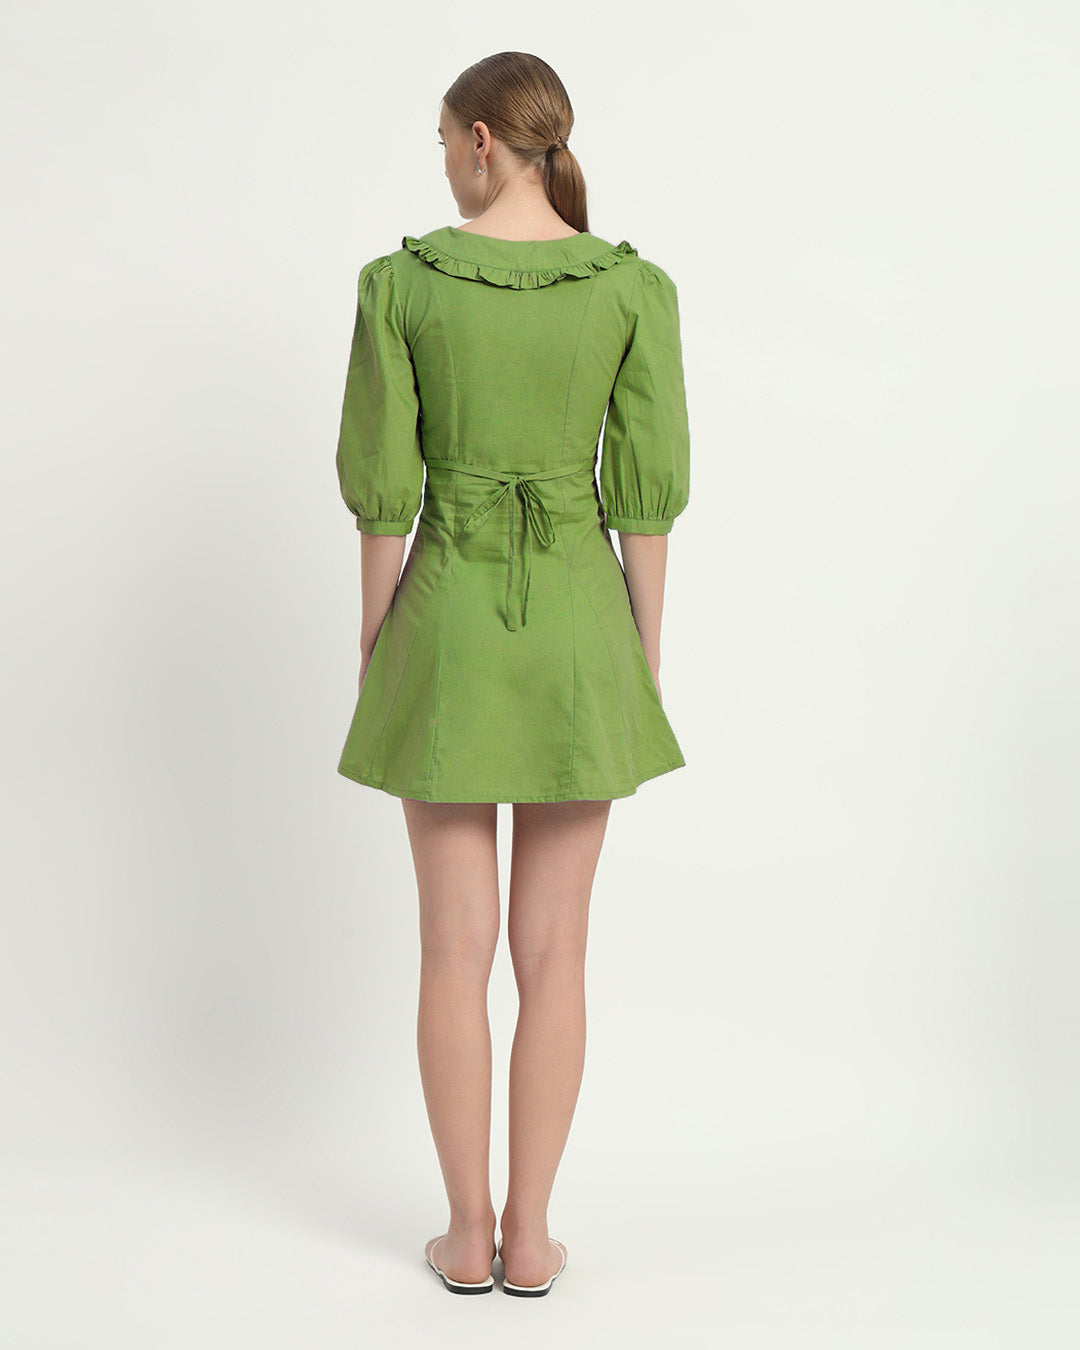 The Isabela Fern Cotton Dress